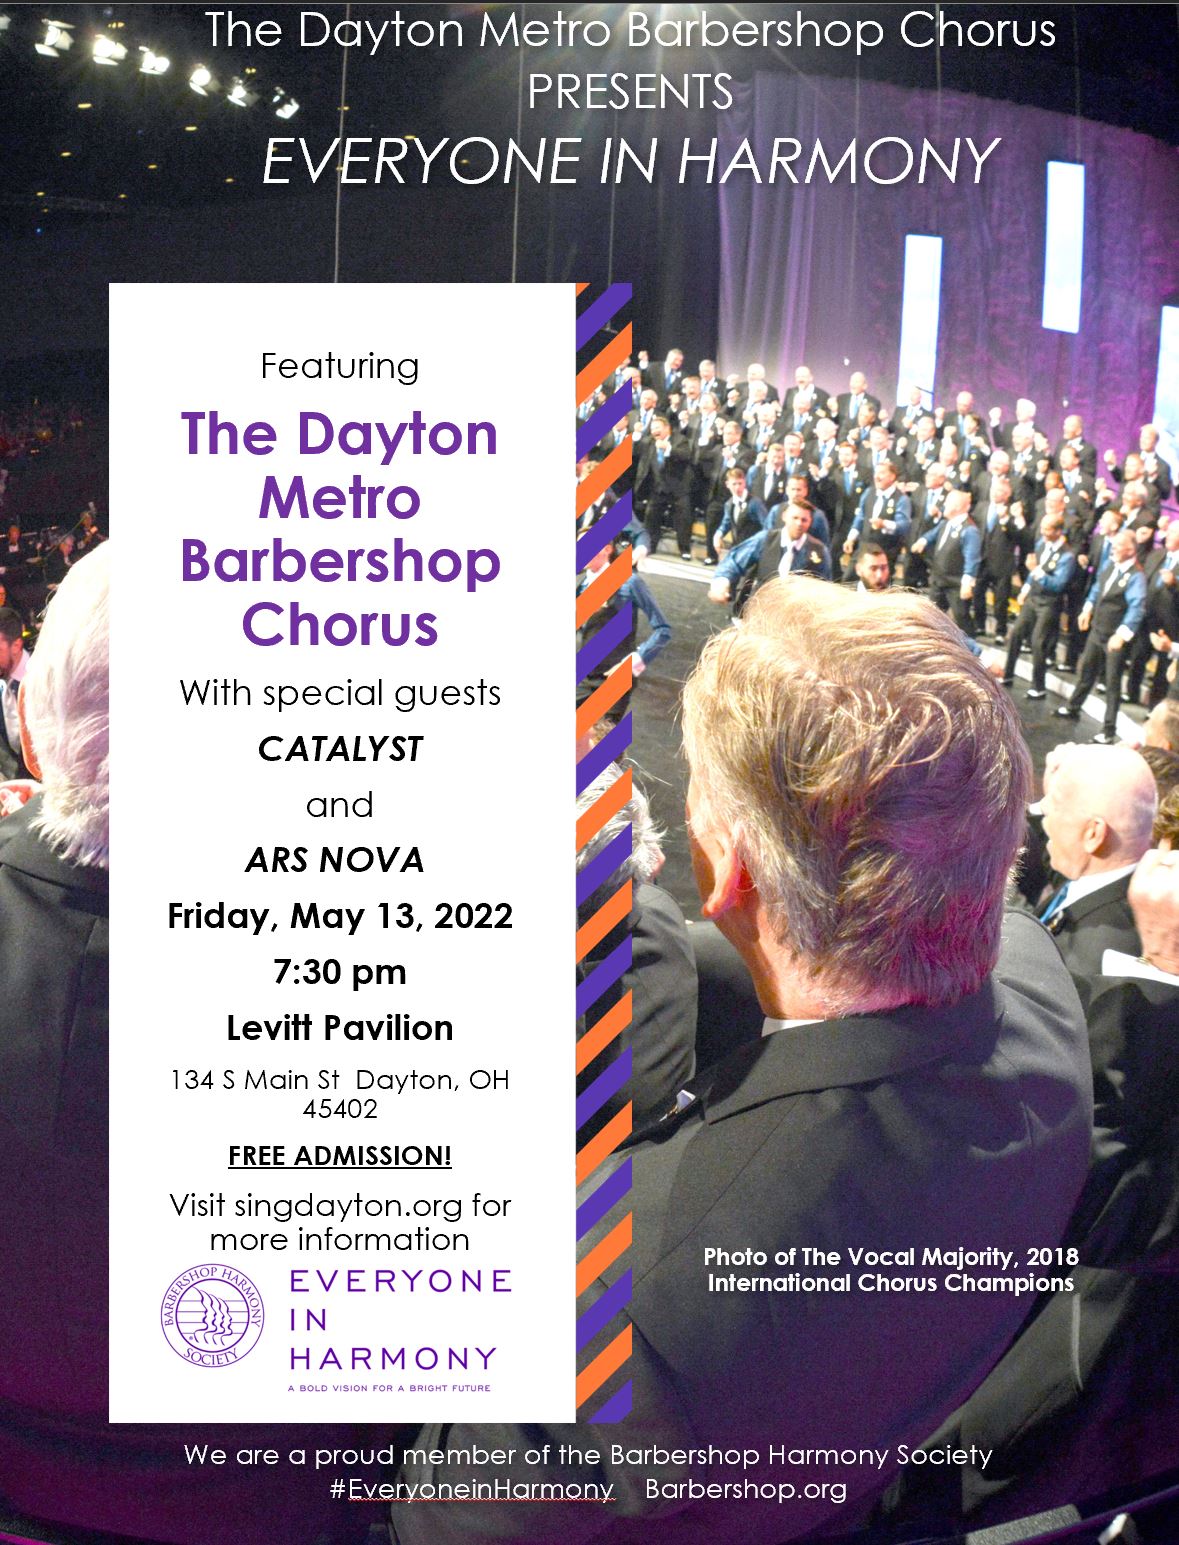 The Dayton Metro Barbershop Chorus Presents: Everyone in Harmony feature image